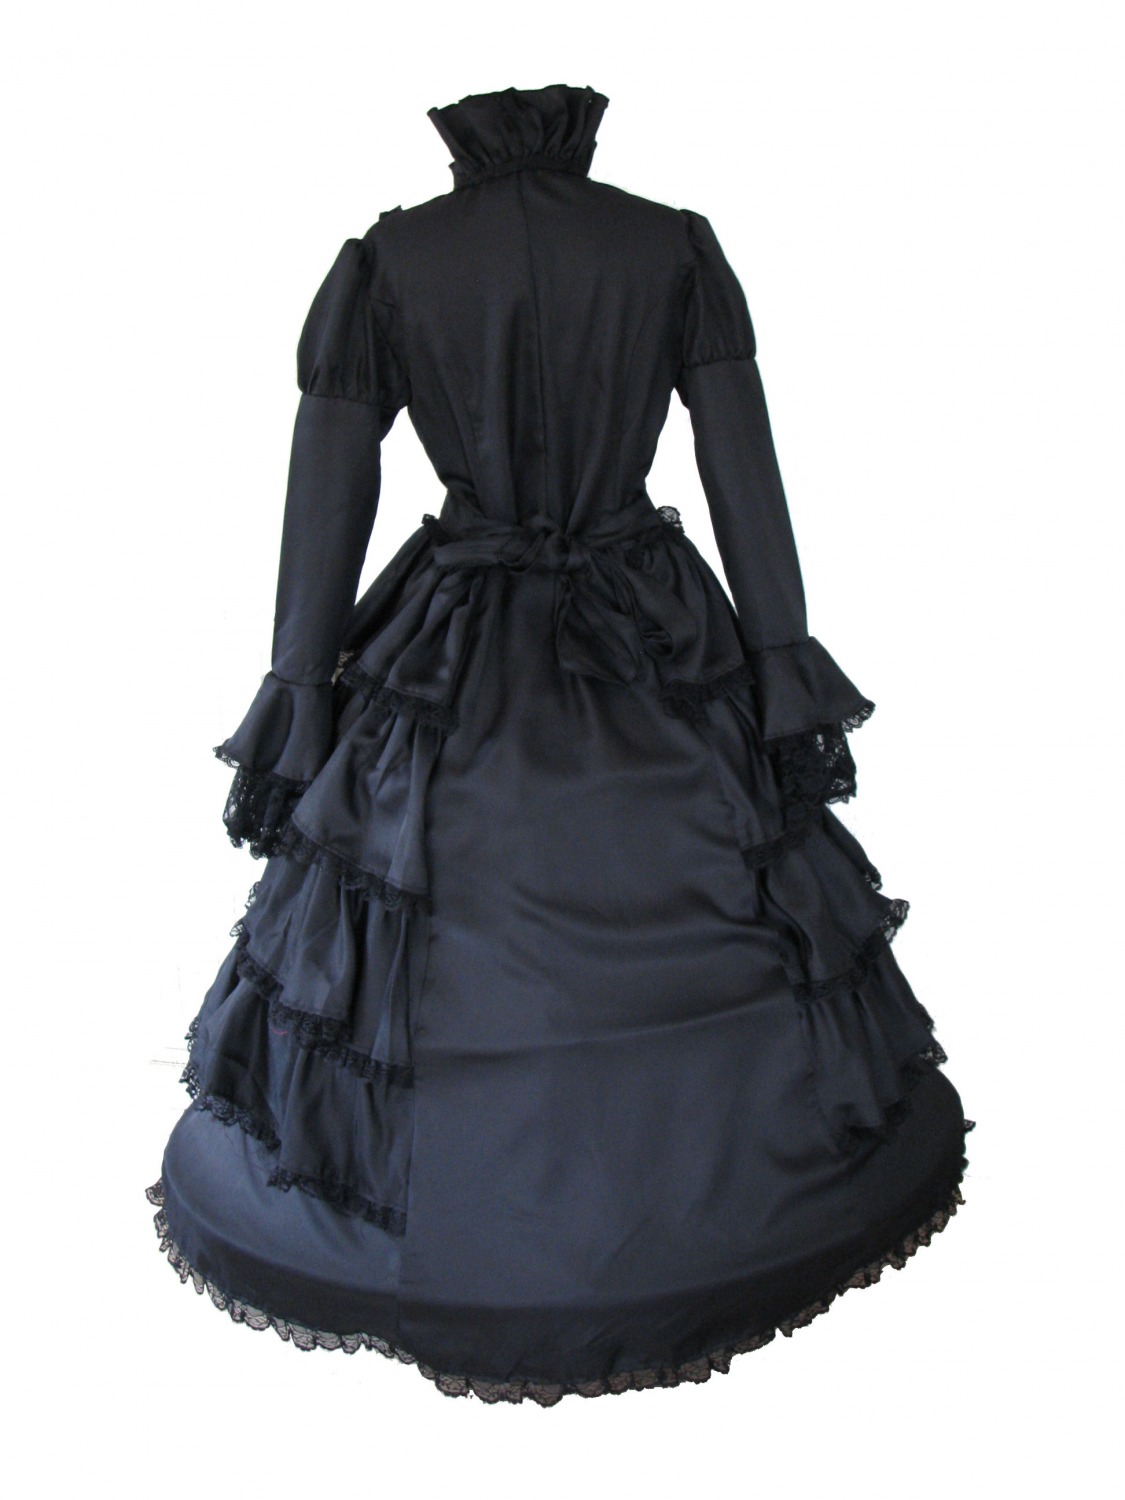 Ladies Victorian Edwardian Day Costume Size 14 - 16 Image